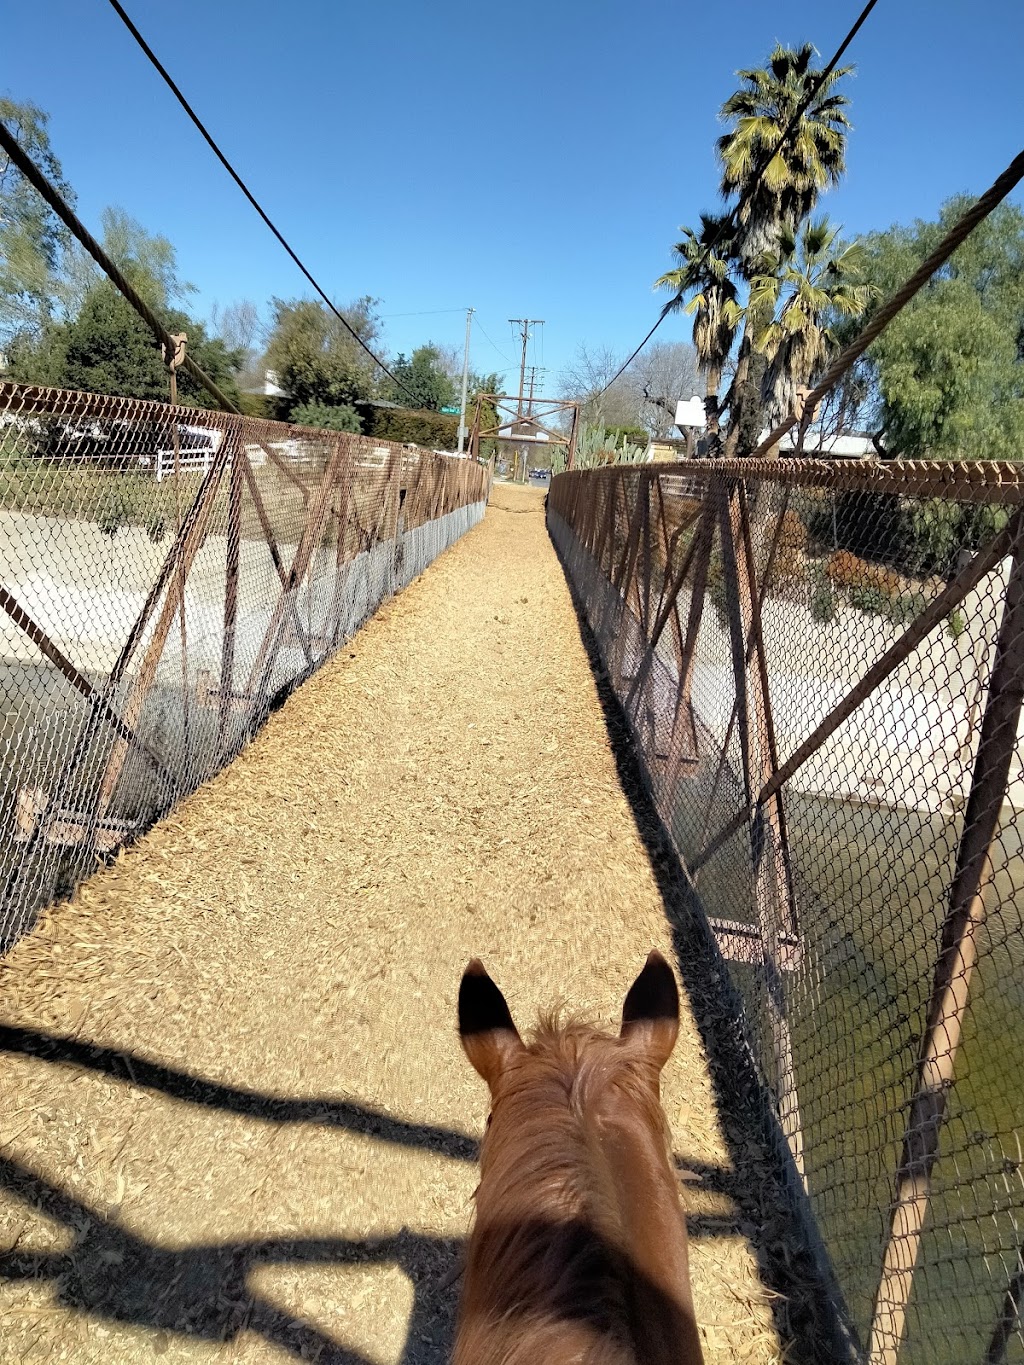 Griffith Park Horse Rentals | 1820 Riverside Dr, Glendale, CA 91201, USA | Phone: (818) 840-8401